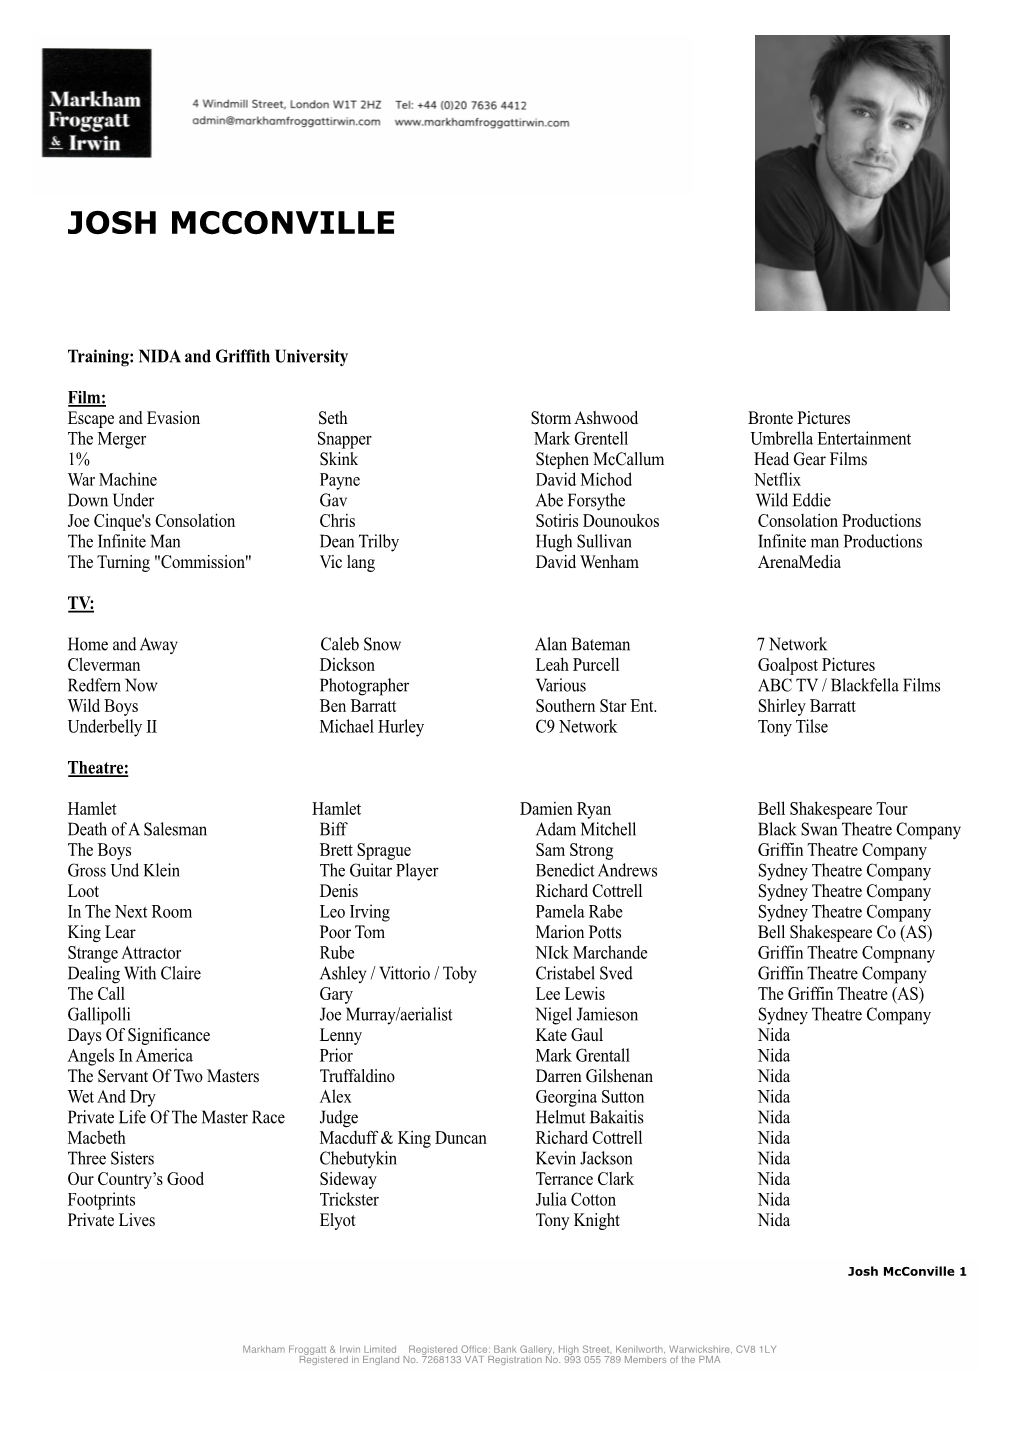 Josh Mcconville